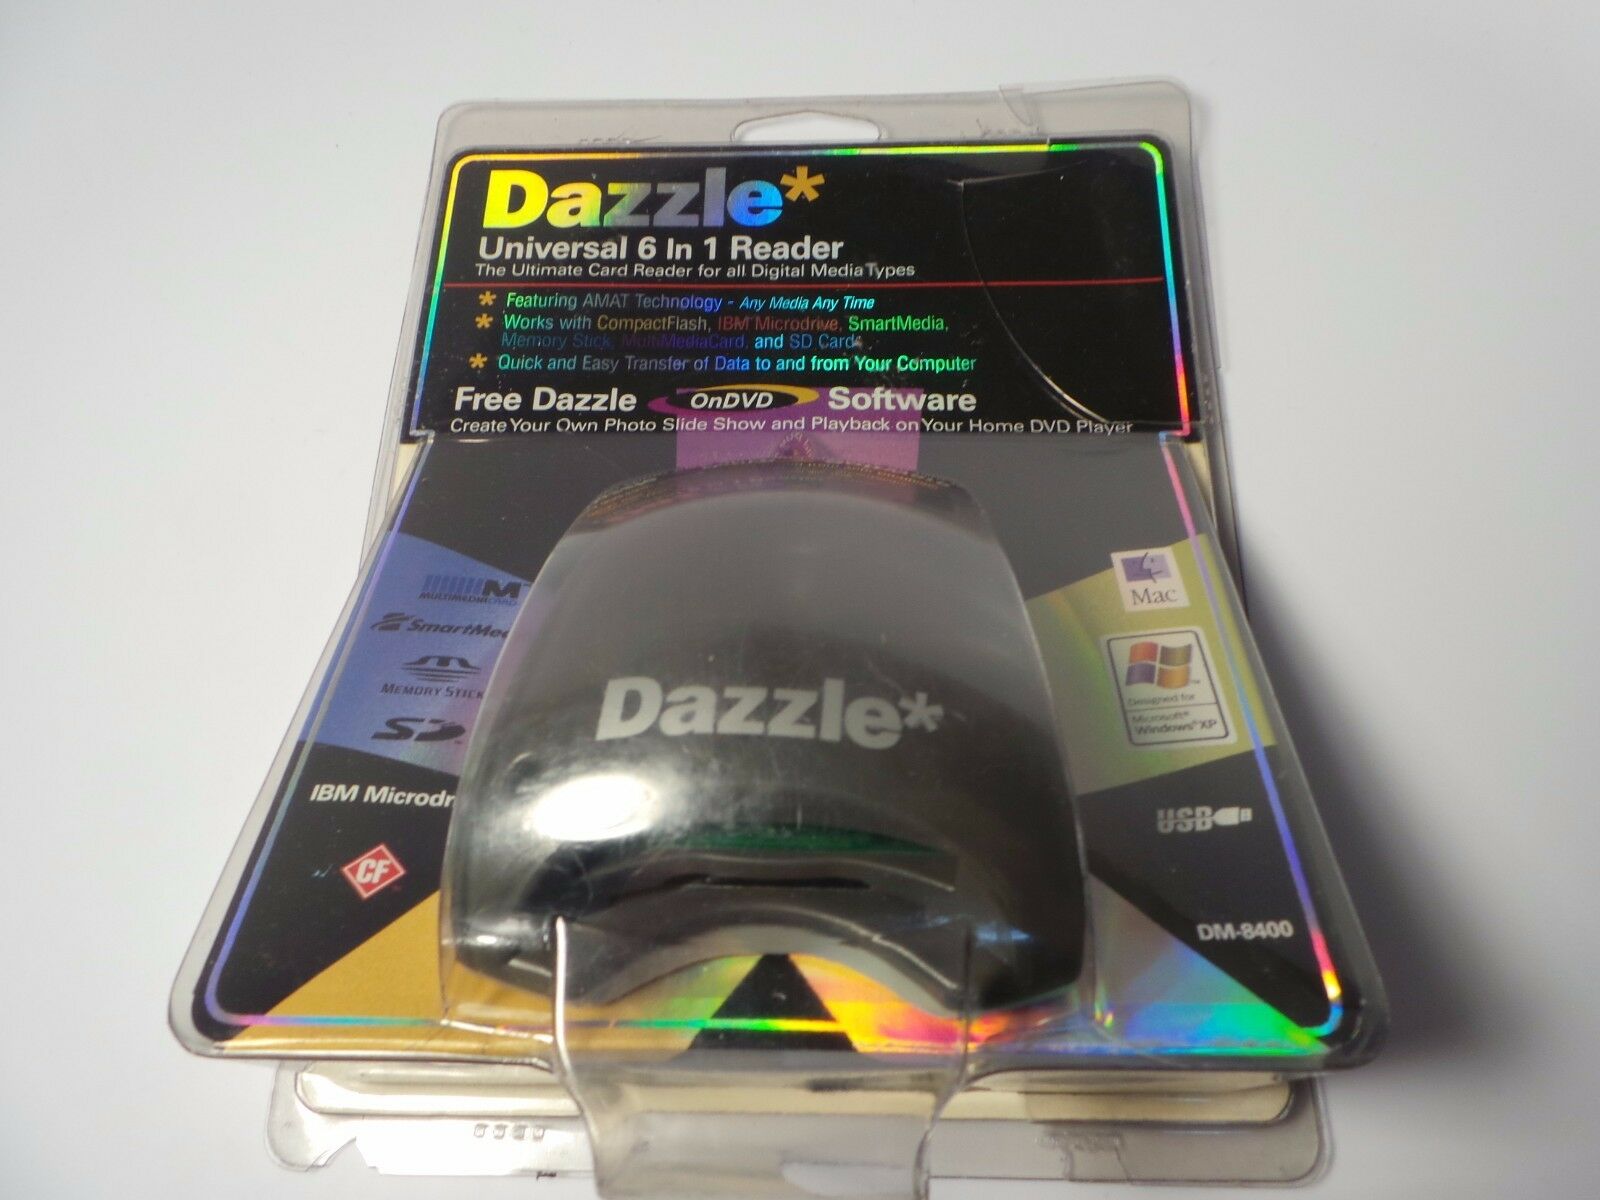 Dazzle card reader software